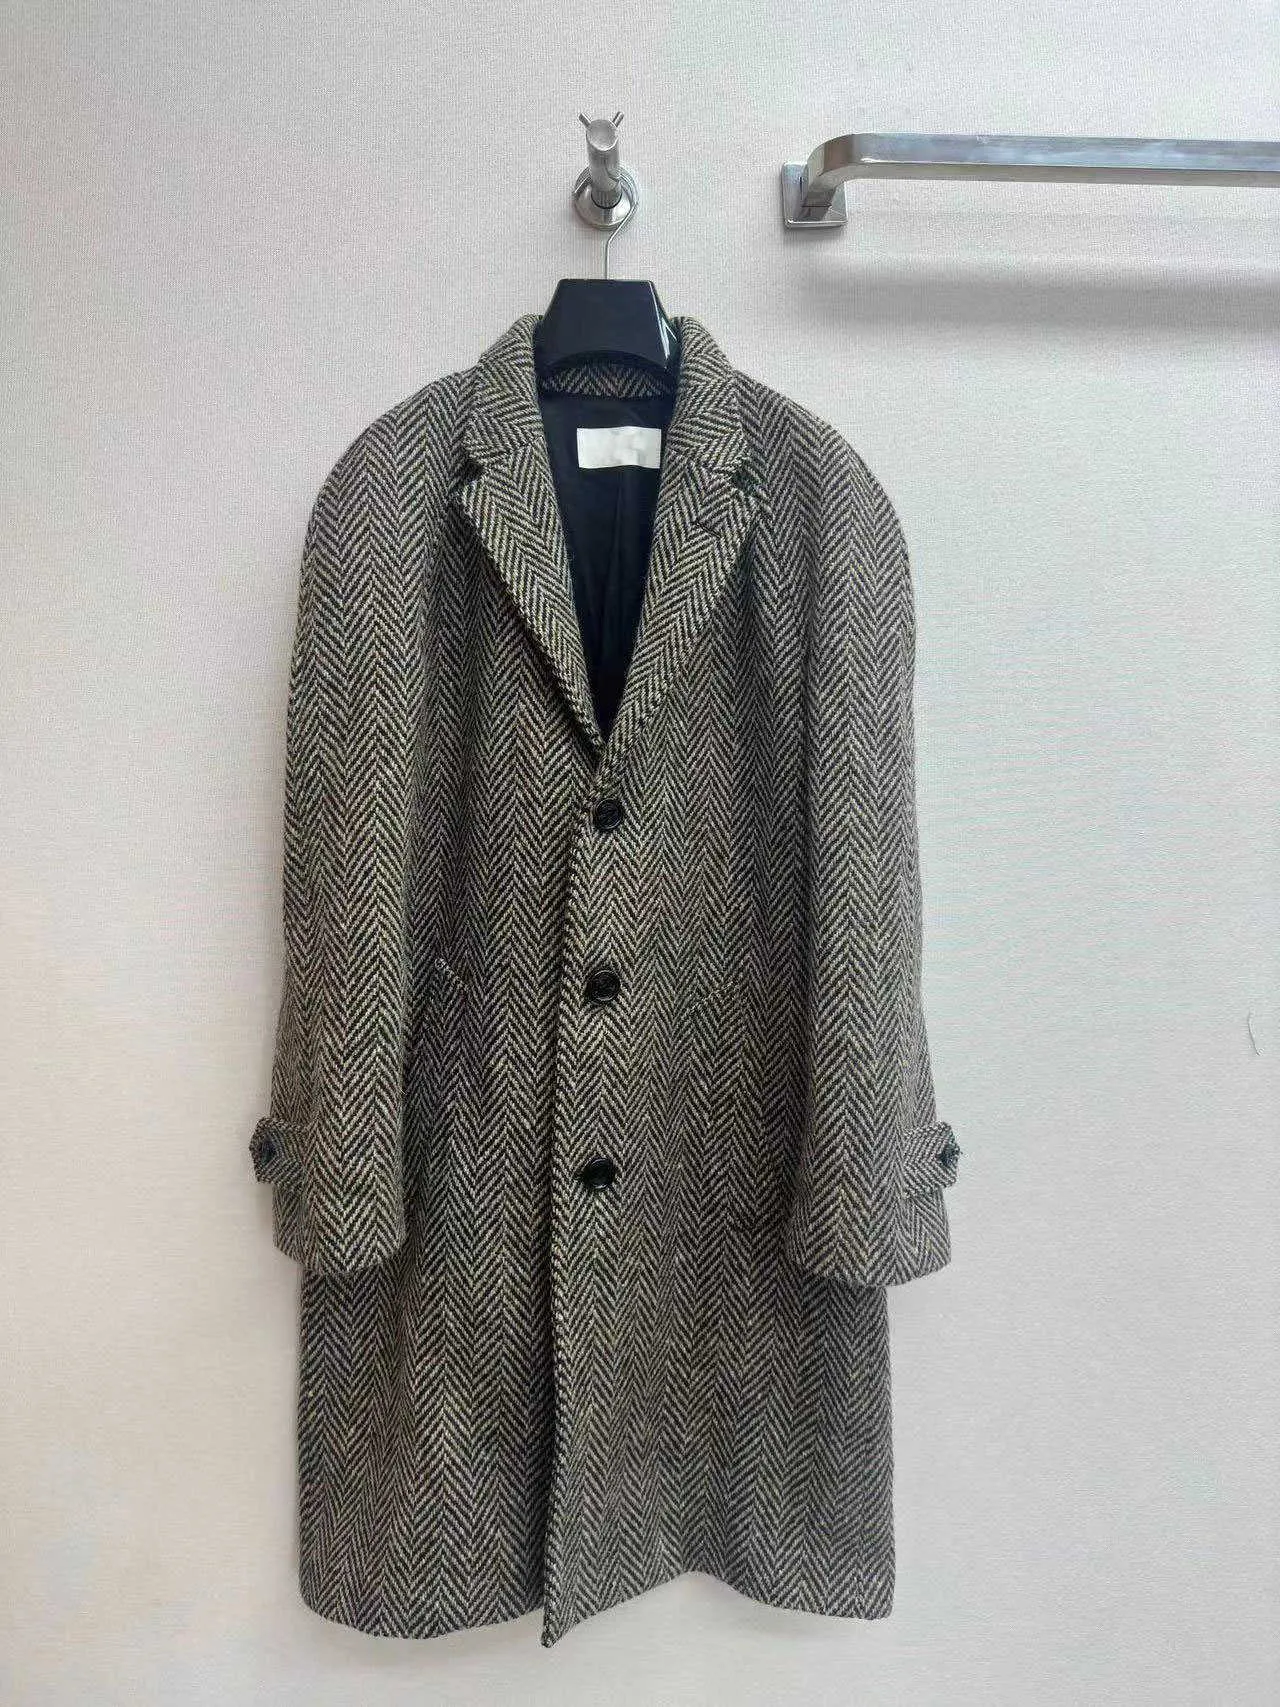 CLinee Autumn and Winter Women's Long Tweed Jacket sned kontur LAPEL WOAL COER Herr Retro Coat Enkel atmosfärisk kappa